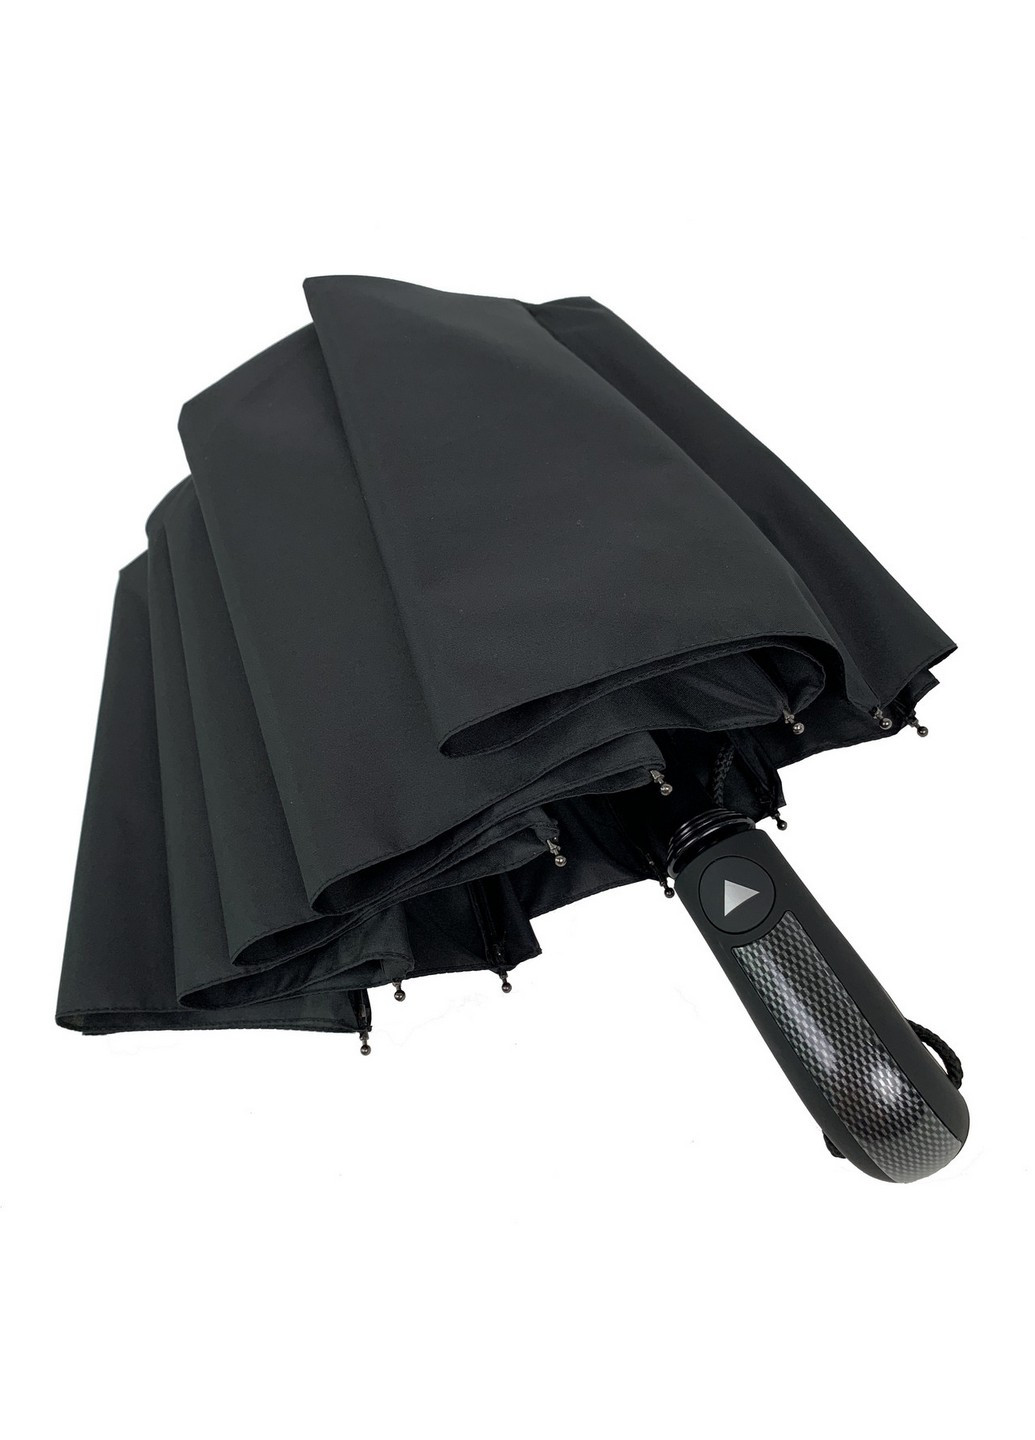 Мужской зонт-автомат 102 см Flagman (258639051)